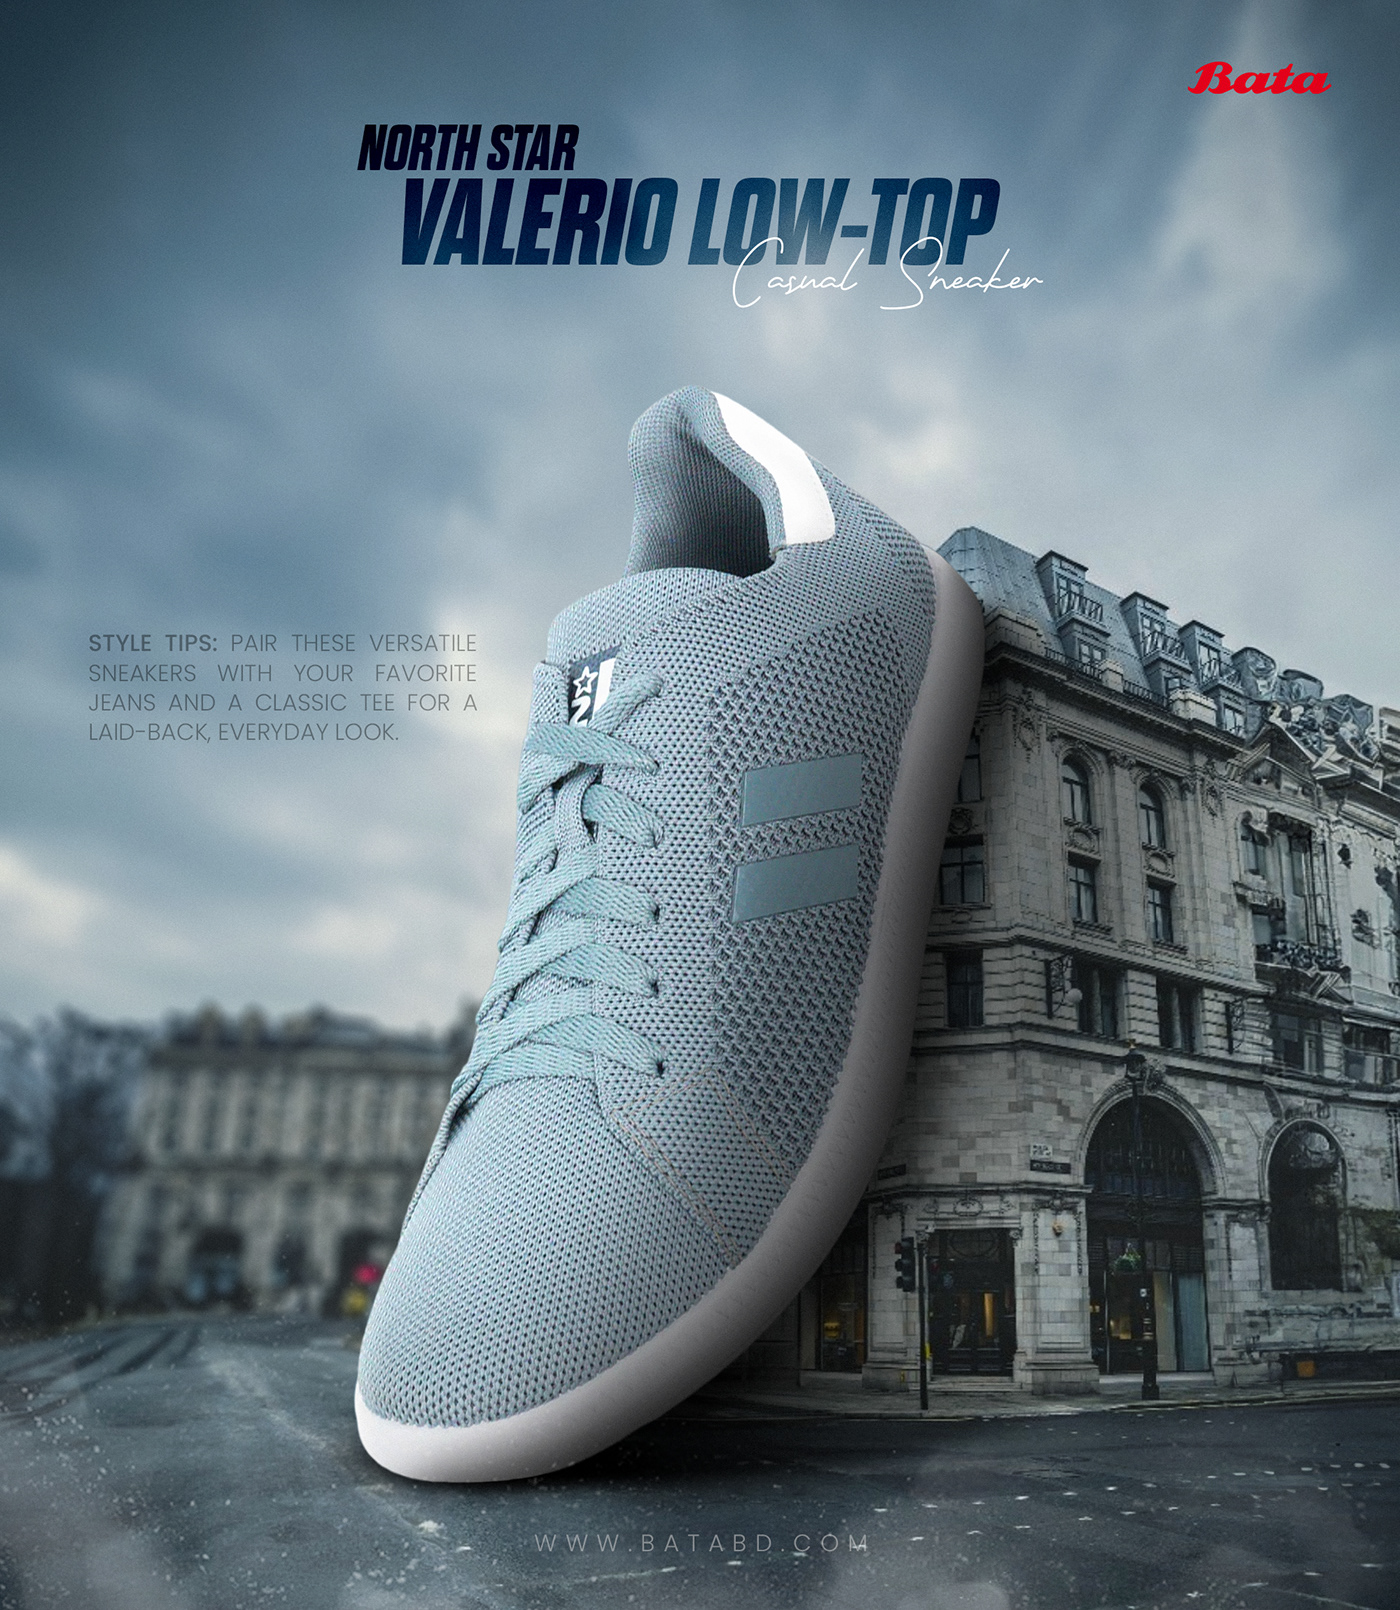 footwear sneakers Social media post Socialmedia ads Advertising  Product Manipulation